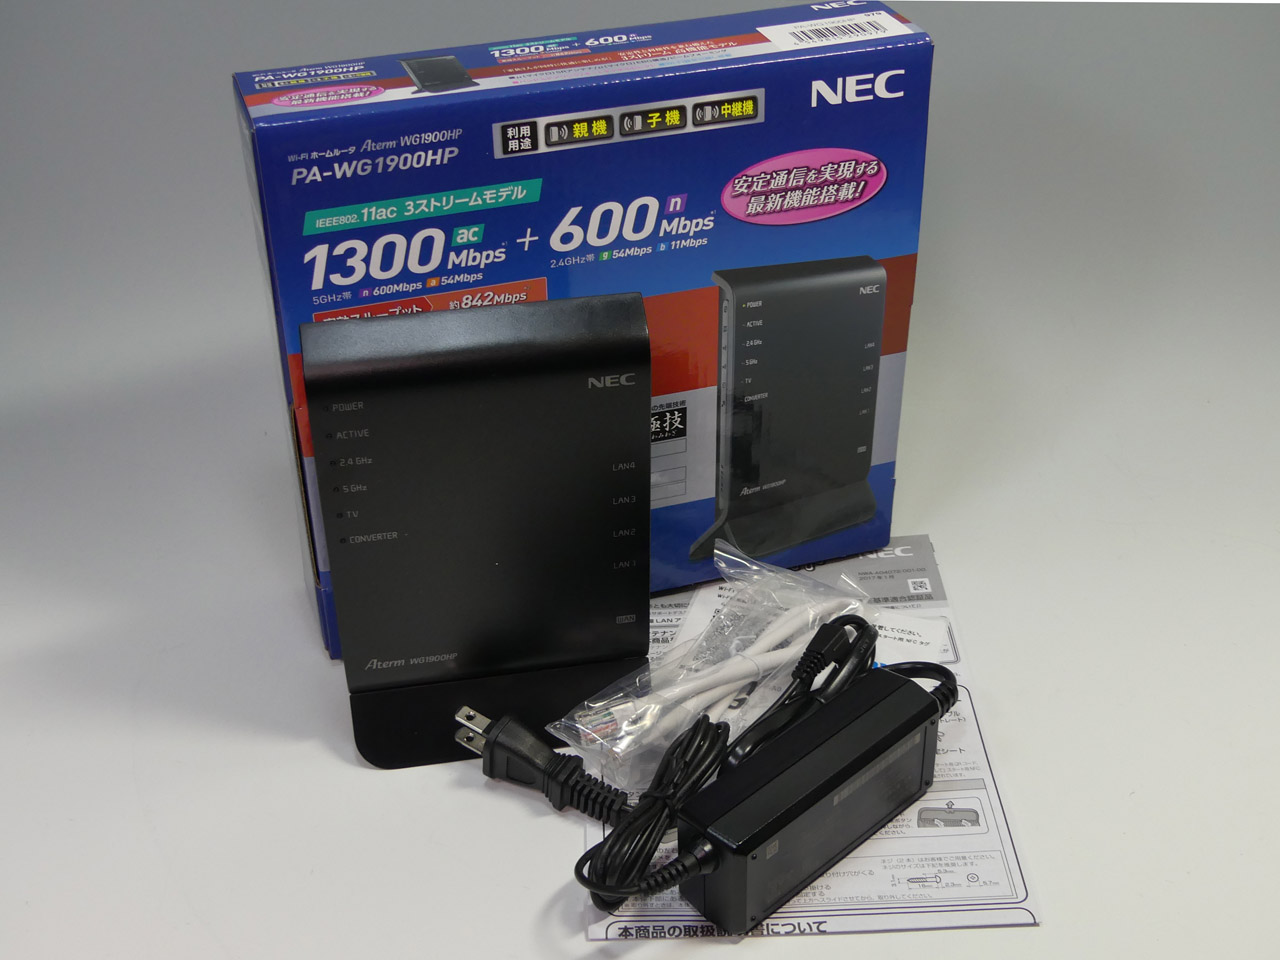 NEC Aterm WG1900HP